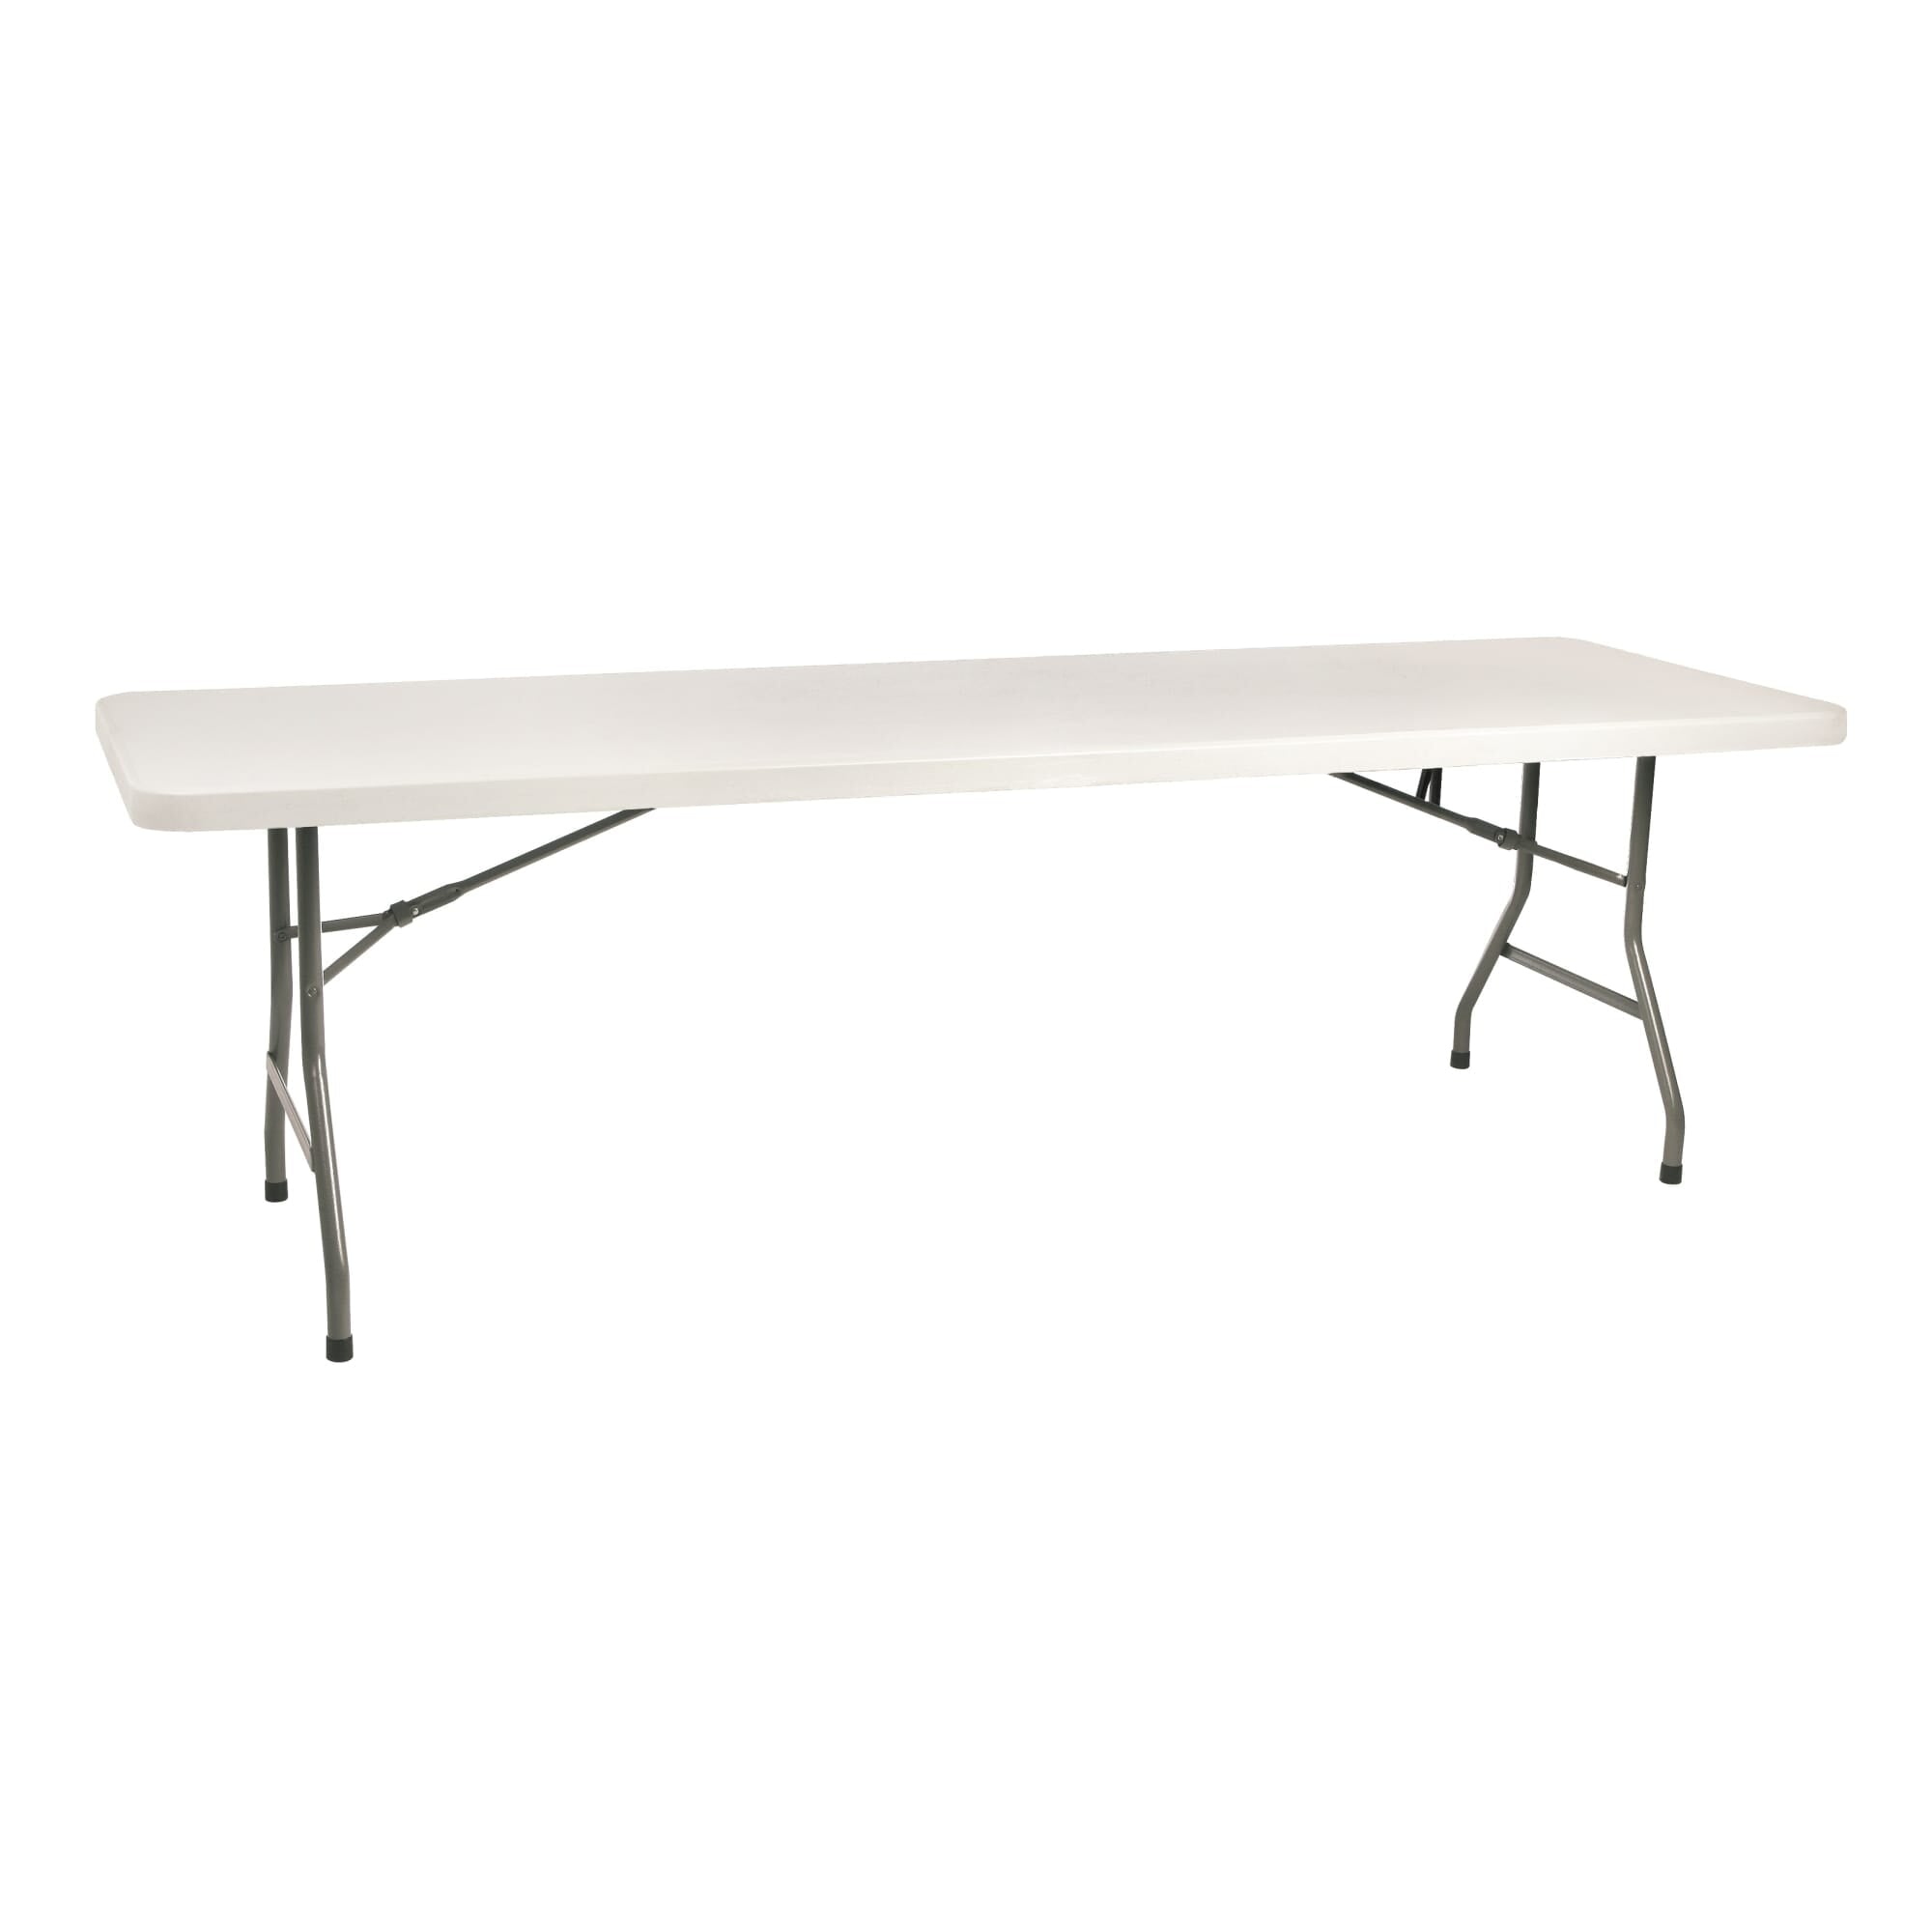 Garbar Wagner rectangular folding table indoors, outdoors